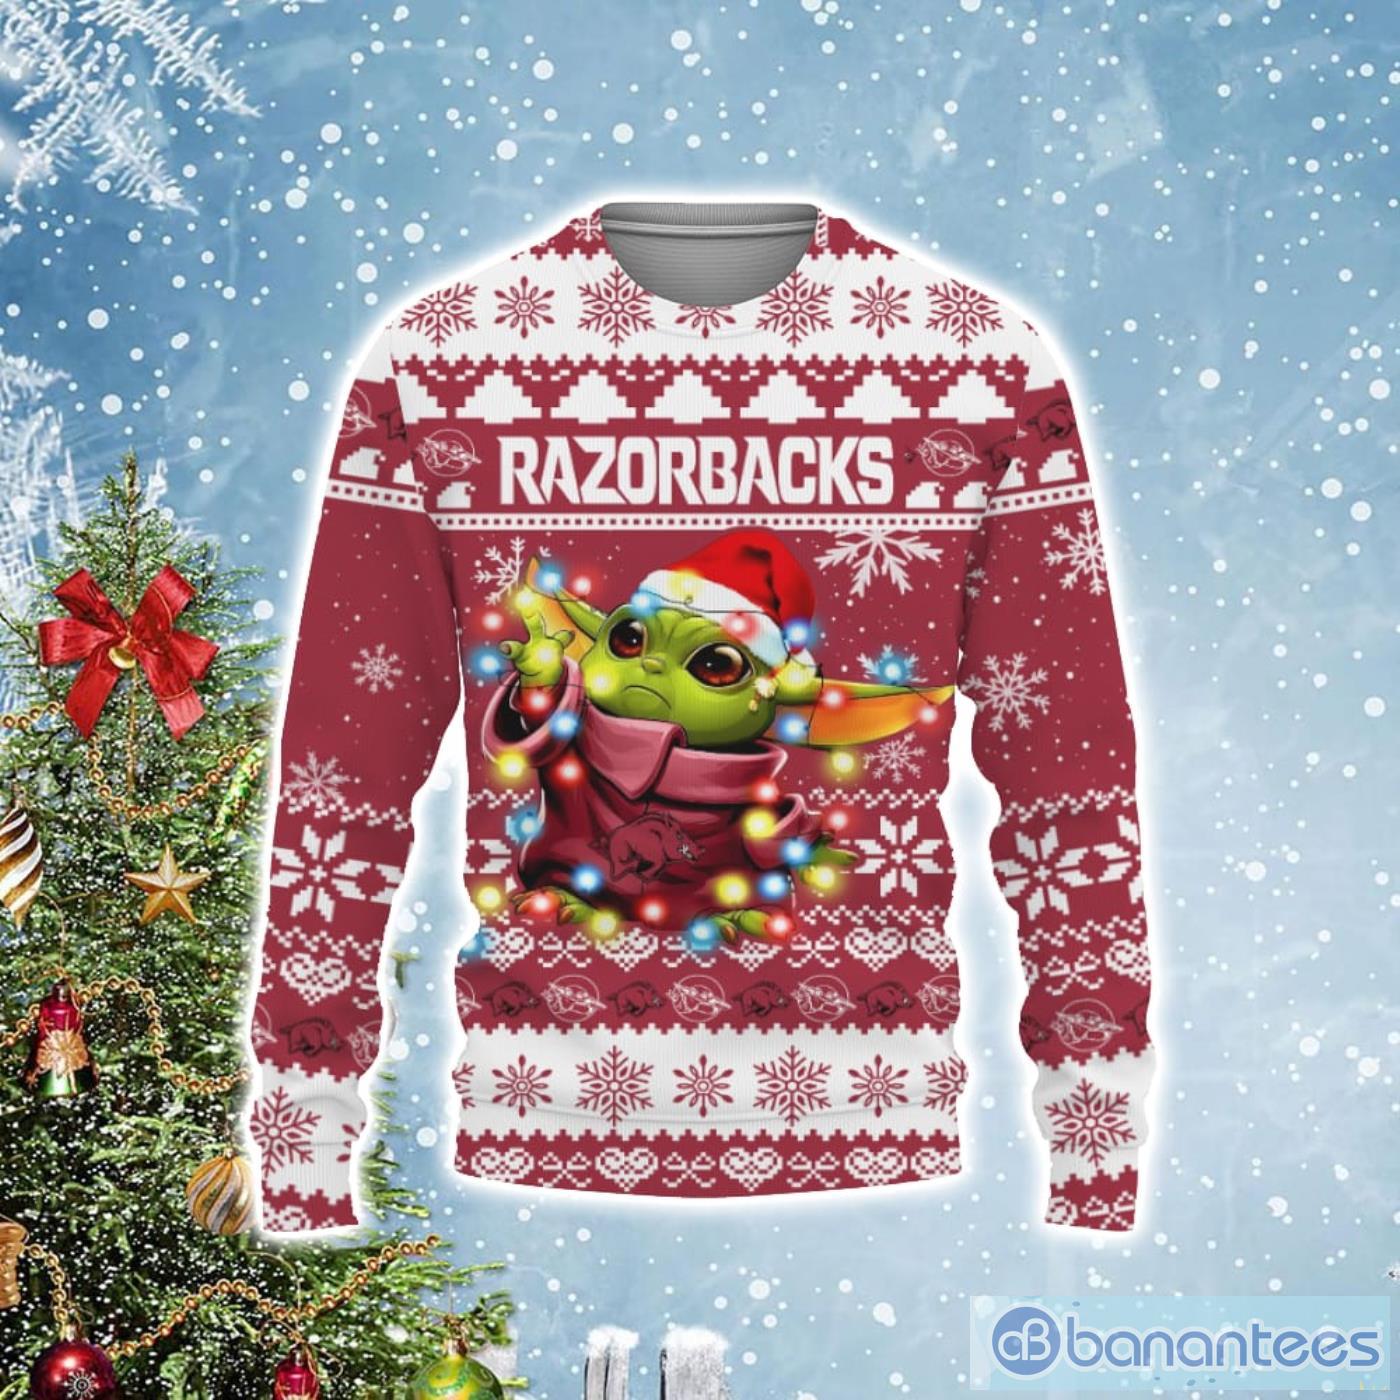 Arkansas Razorbacks Baby Yoda Star Wars Ugly Christmas Sweater Product Photo 1